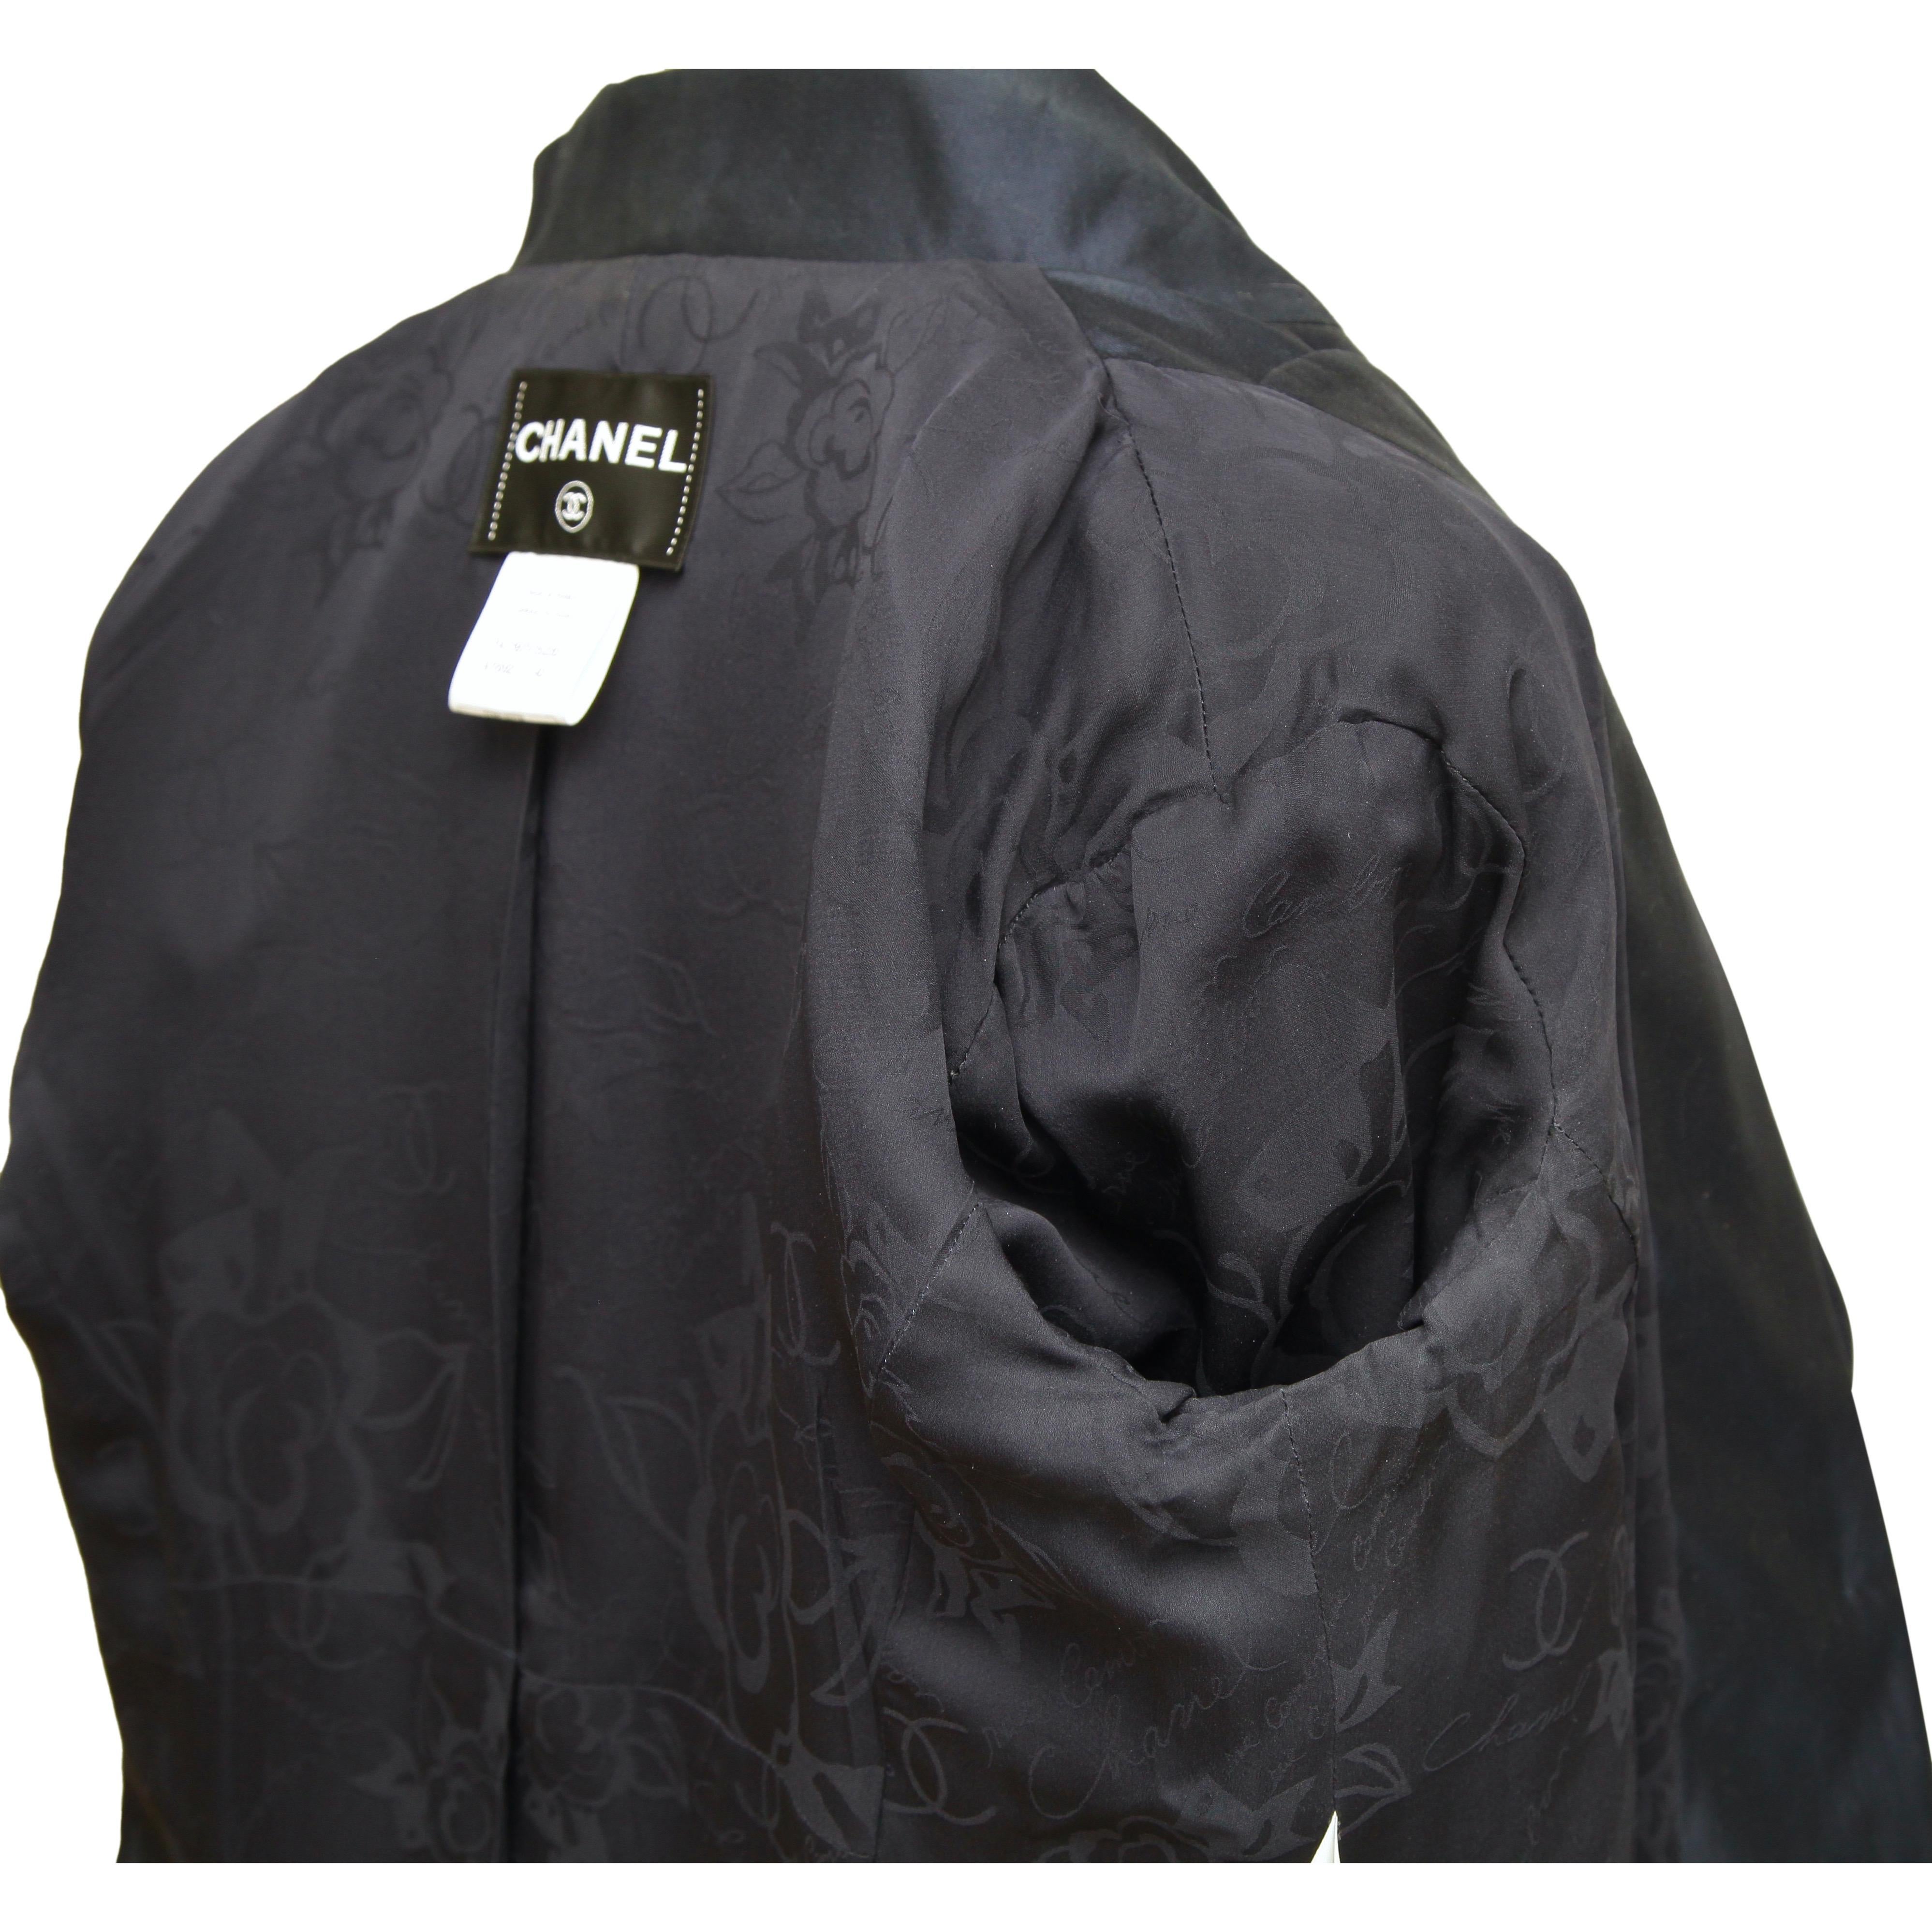 CHANEL Jacket Blazer Coat Navy Blue Silver Chain Long Sleeve Sz 40 2014 14C For Sale 6